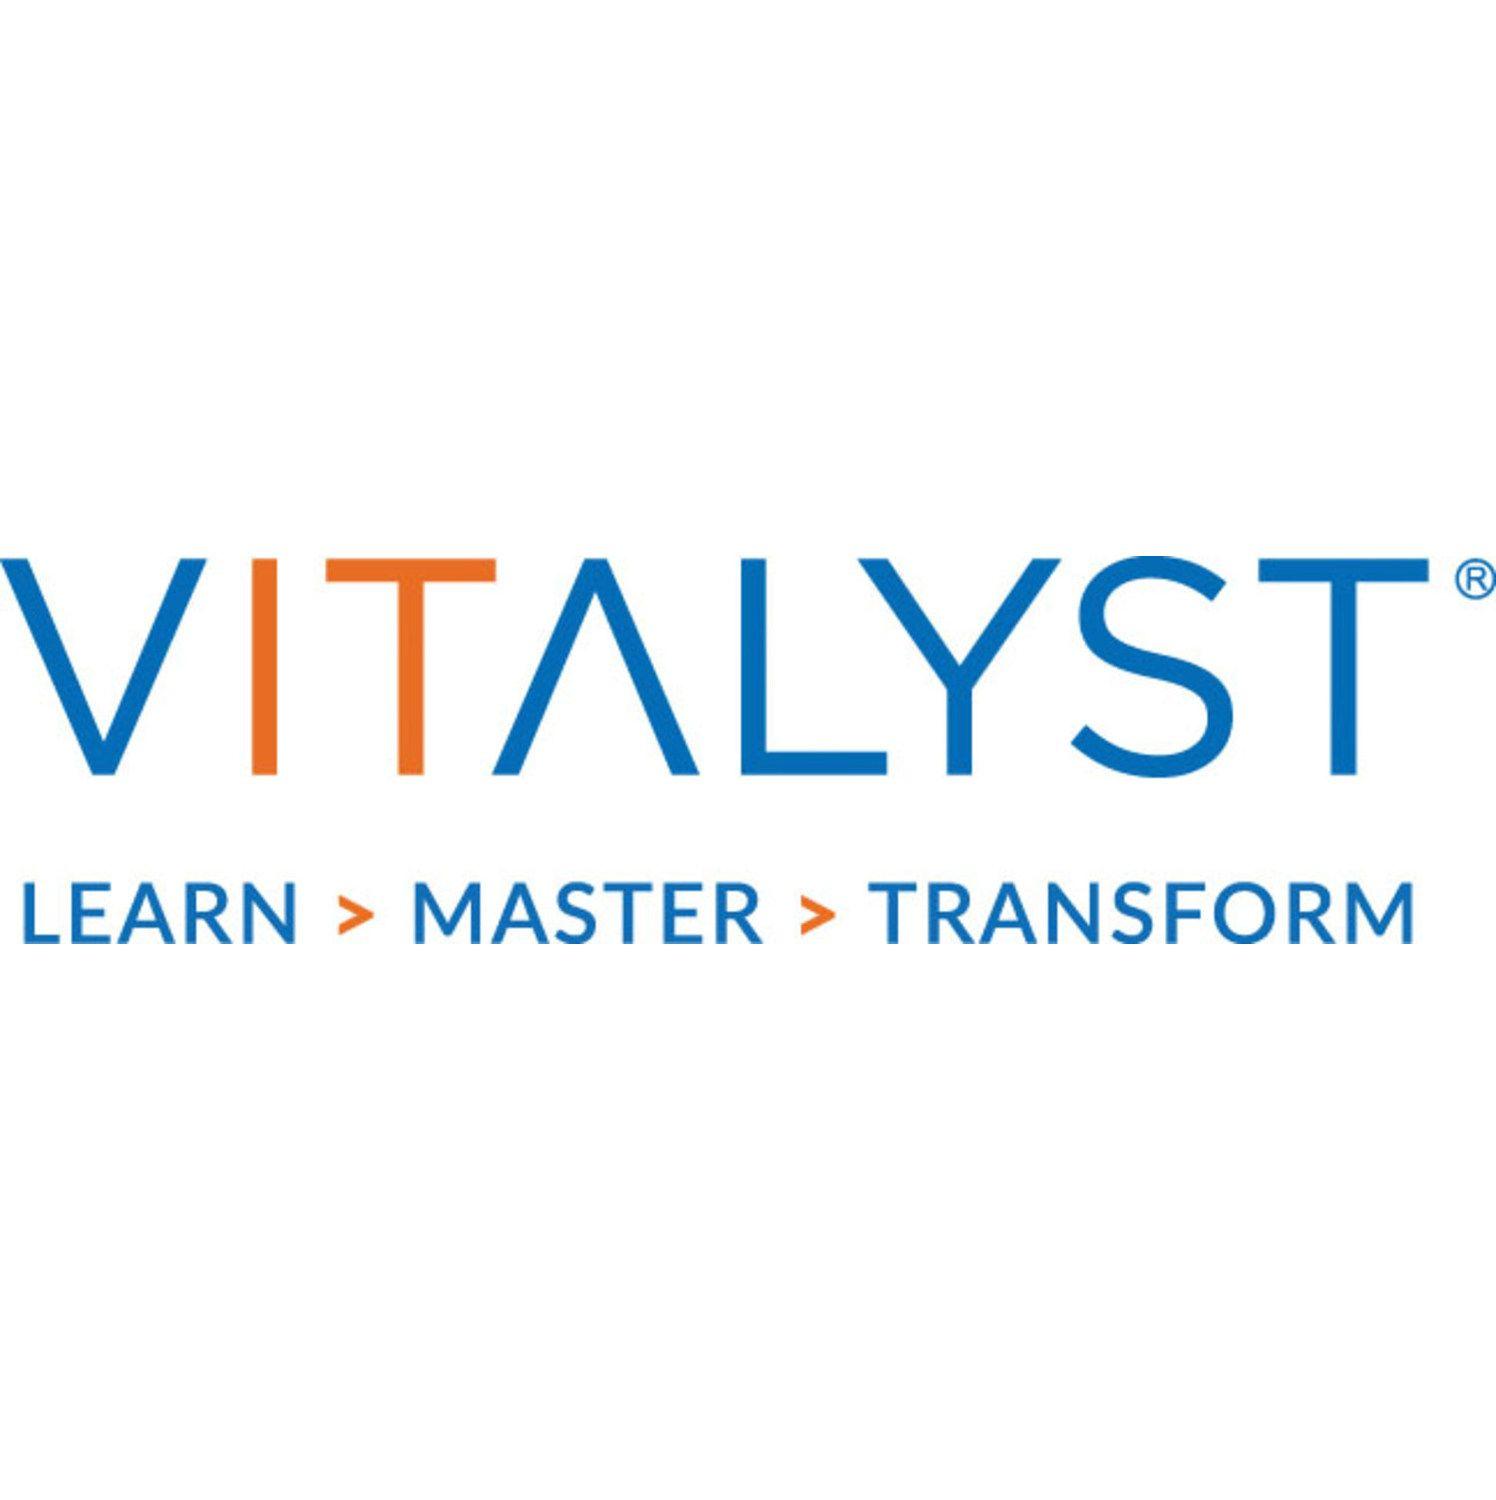 Vitalyst Logo - Vitalyst Expands Microsoft Partner Team Adding Two Industry Leaders